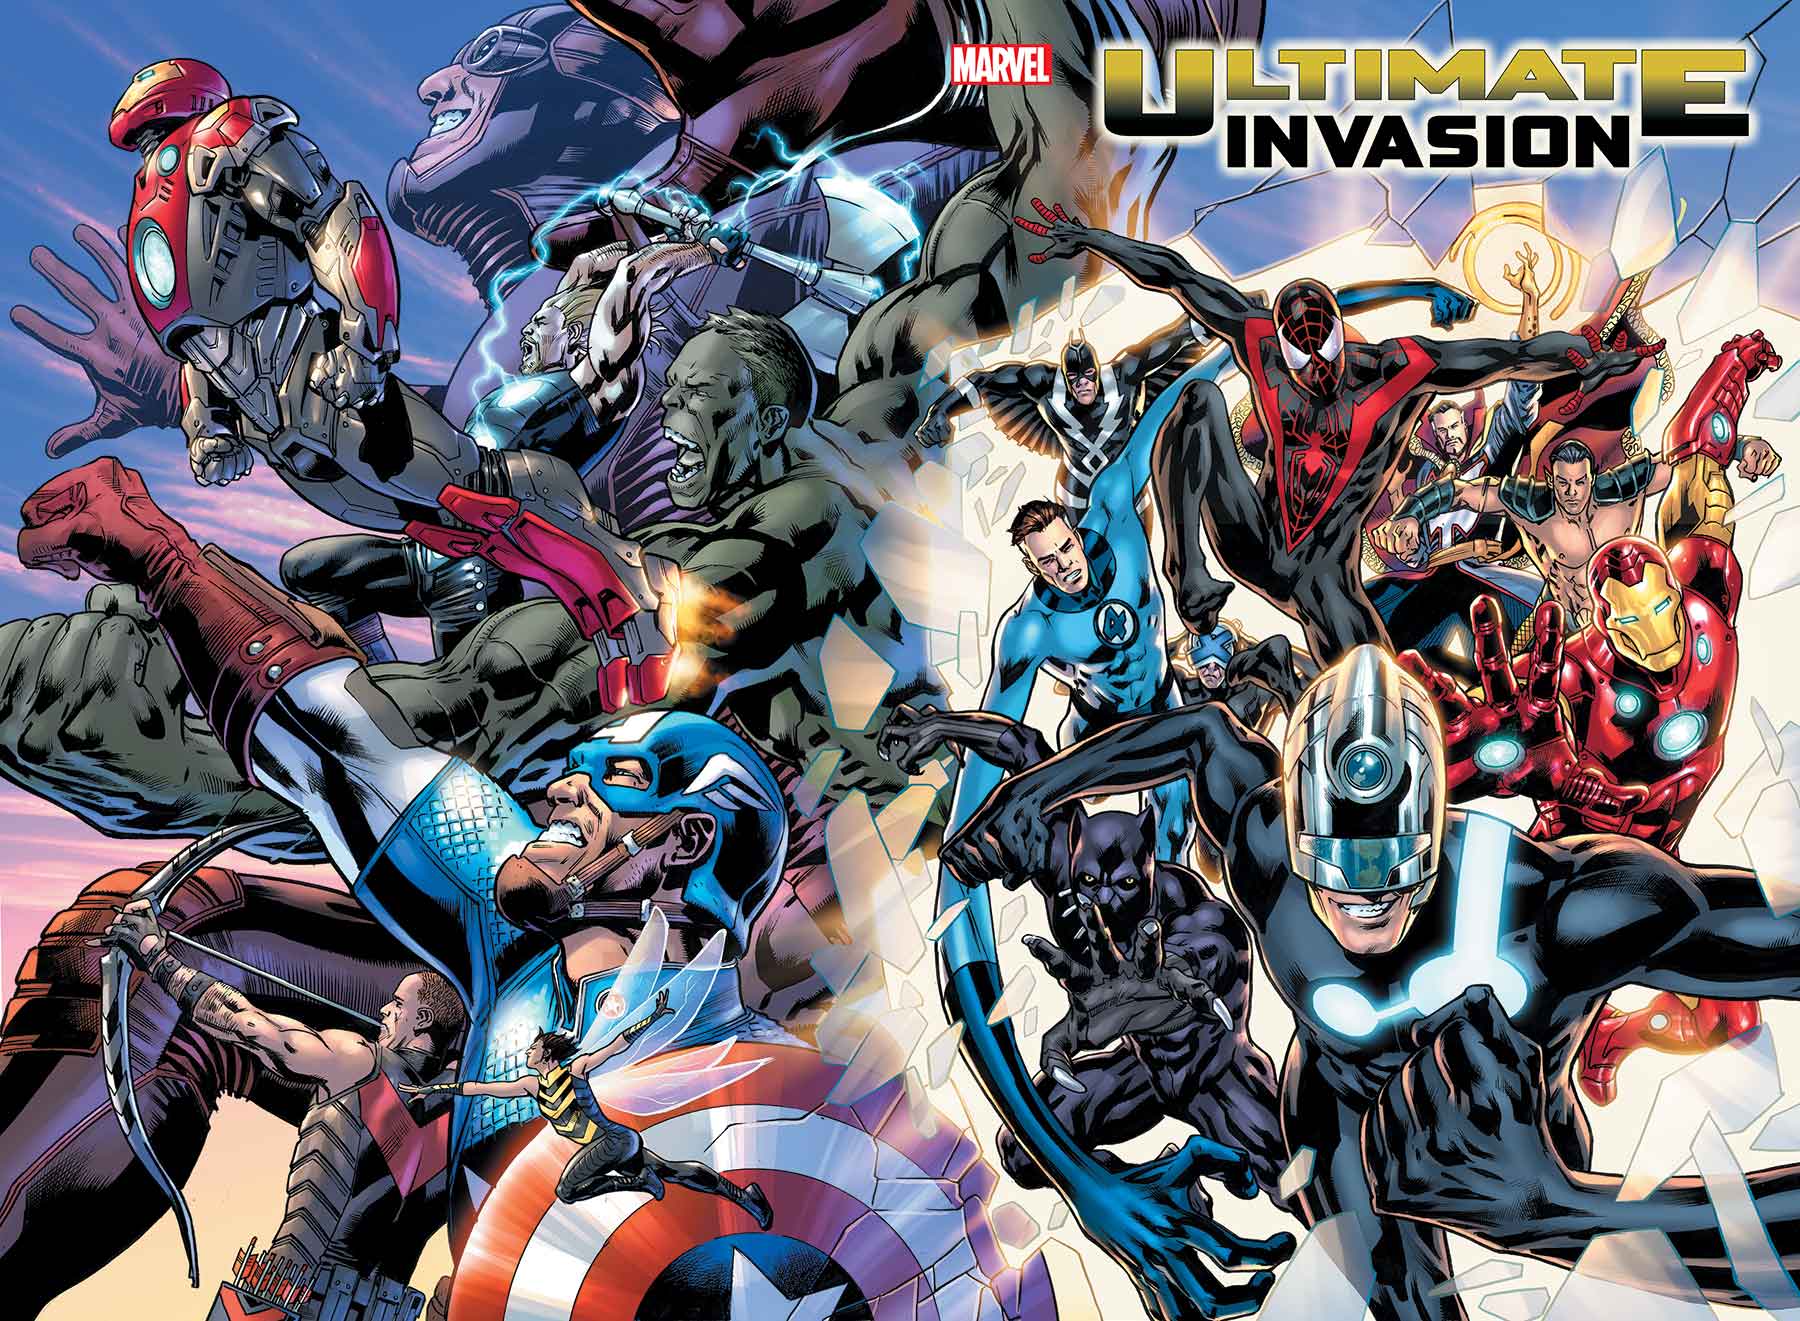 Marvel releases trailer for 'Ultimate Invasion' #1